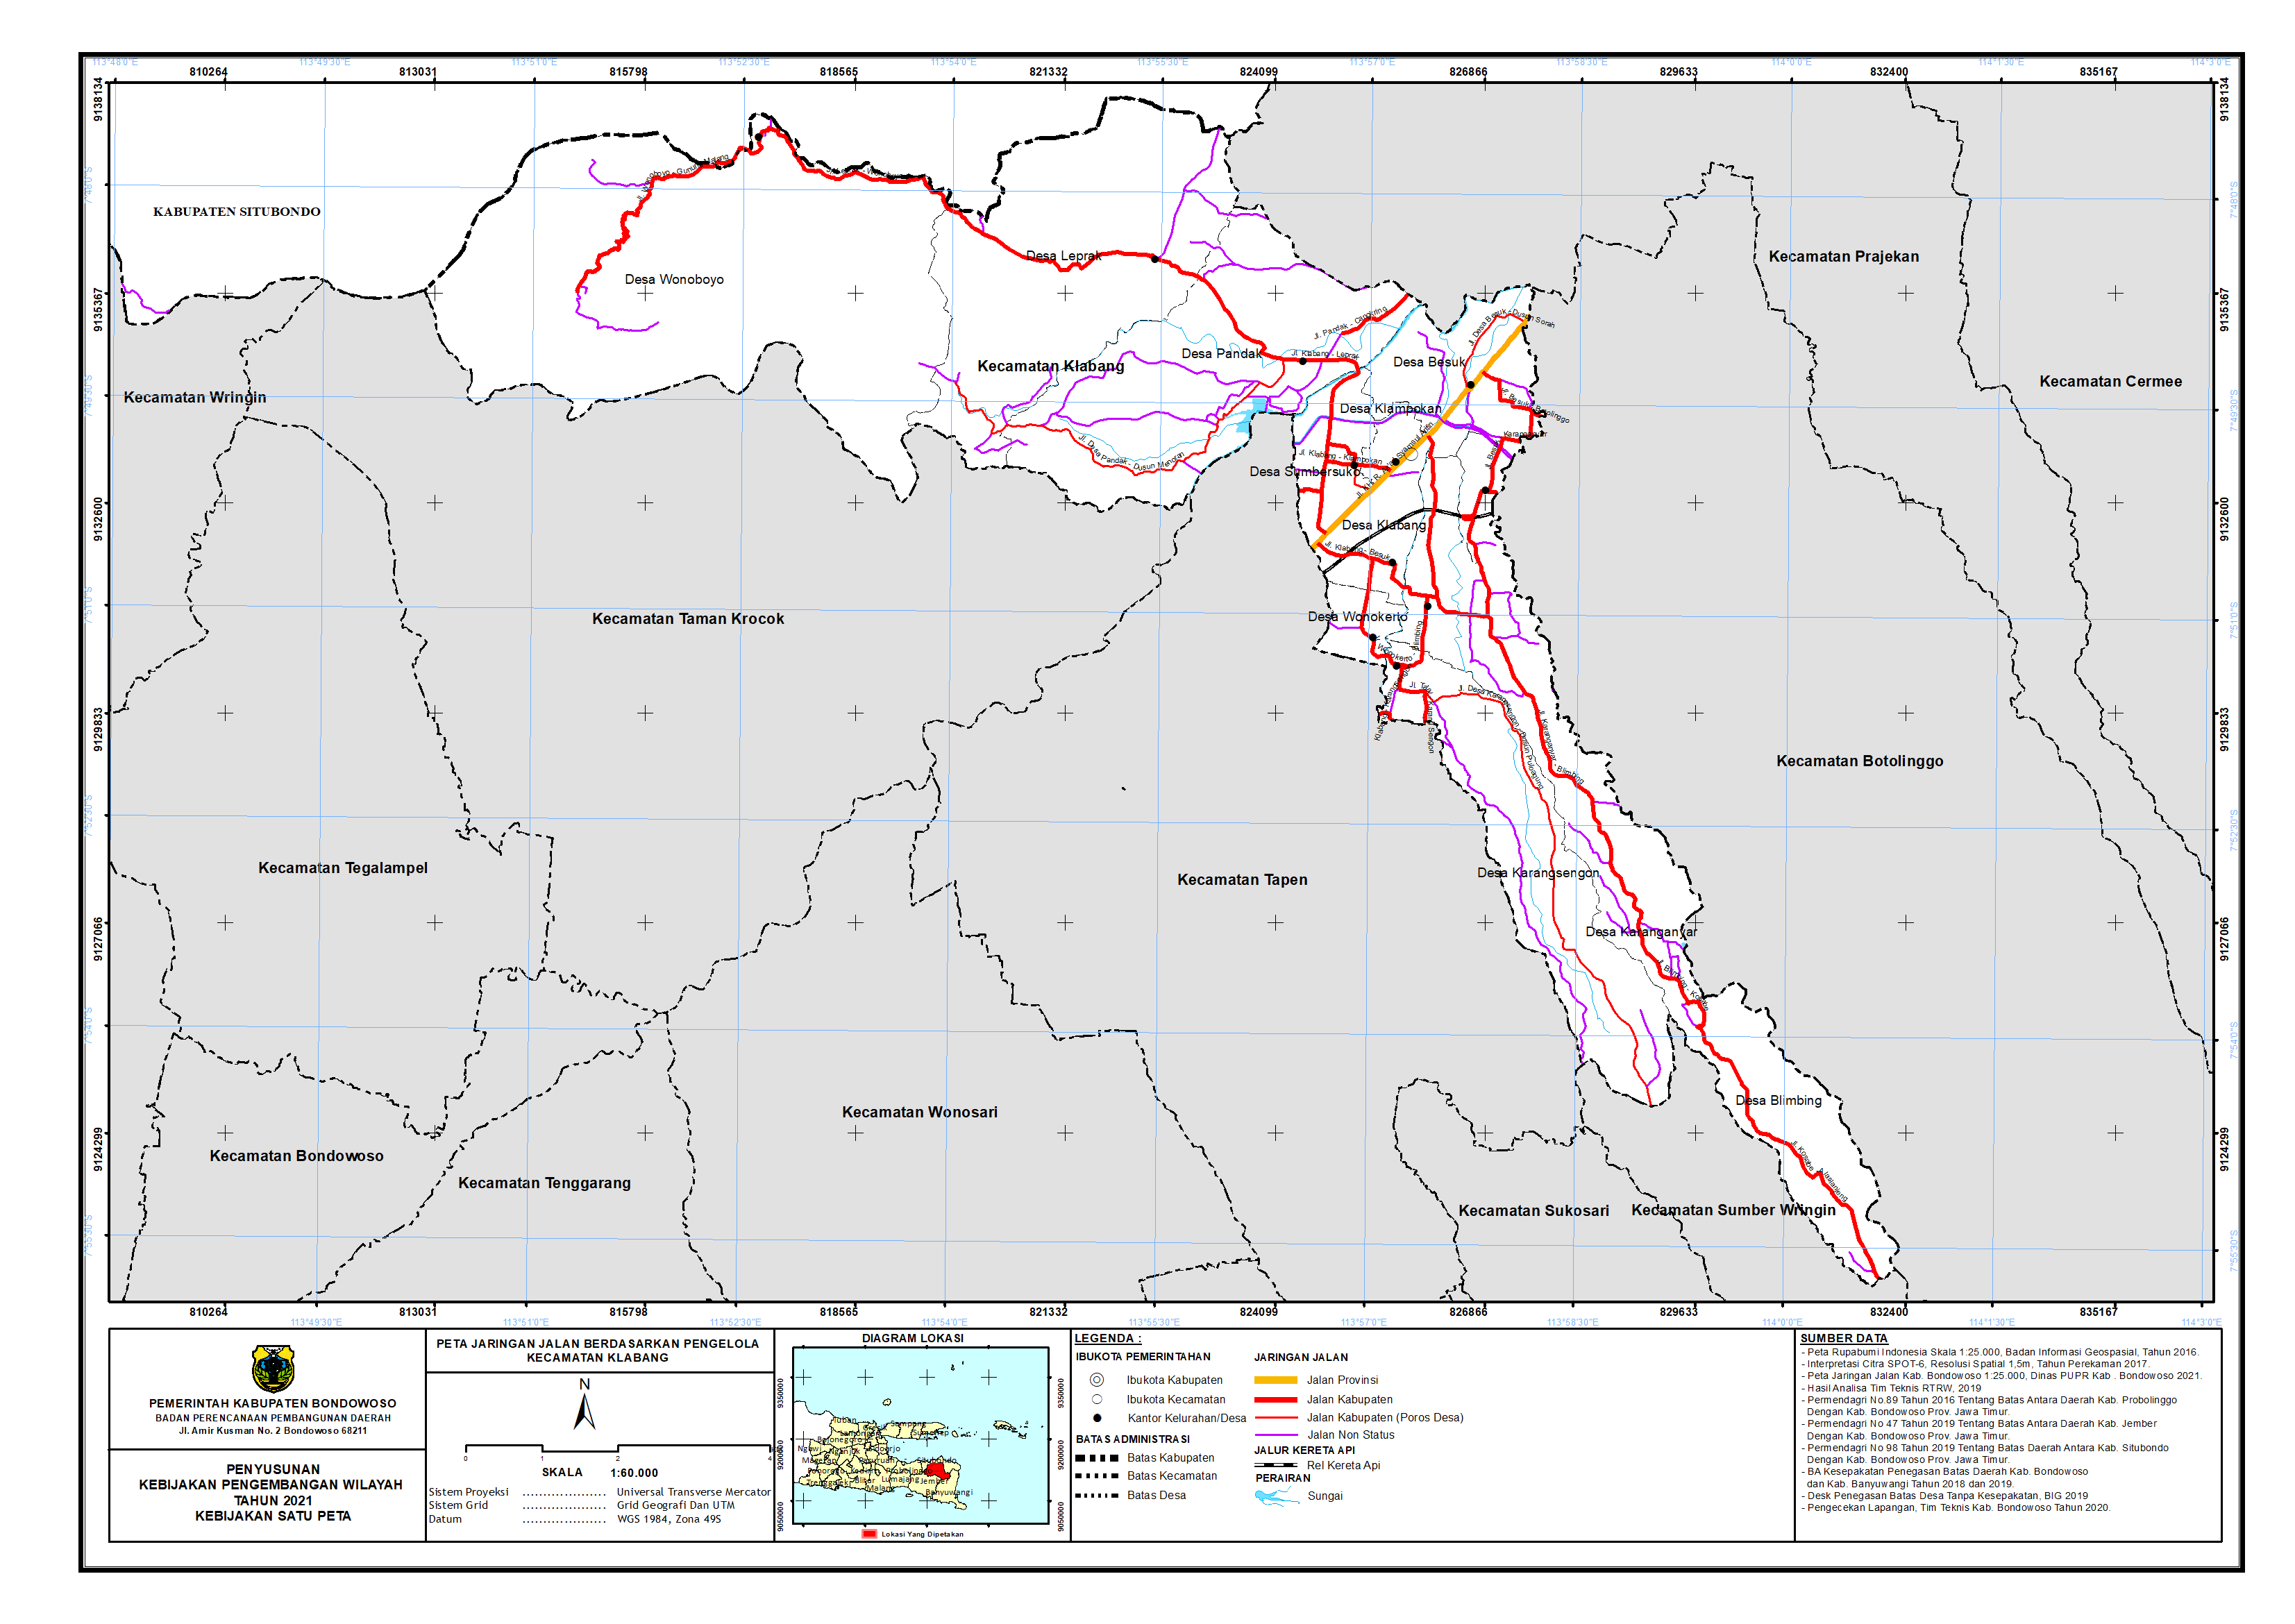 Peta Jaringan Jalan Berdasarkan Pengelola Kecamatan Klabang.png